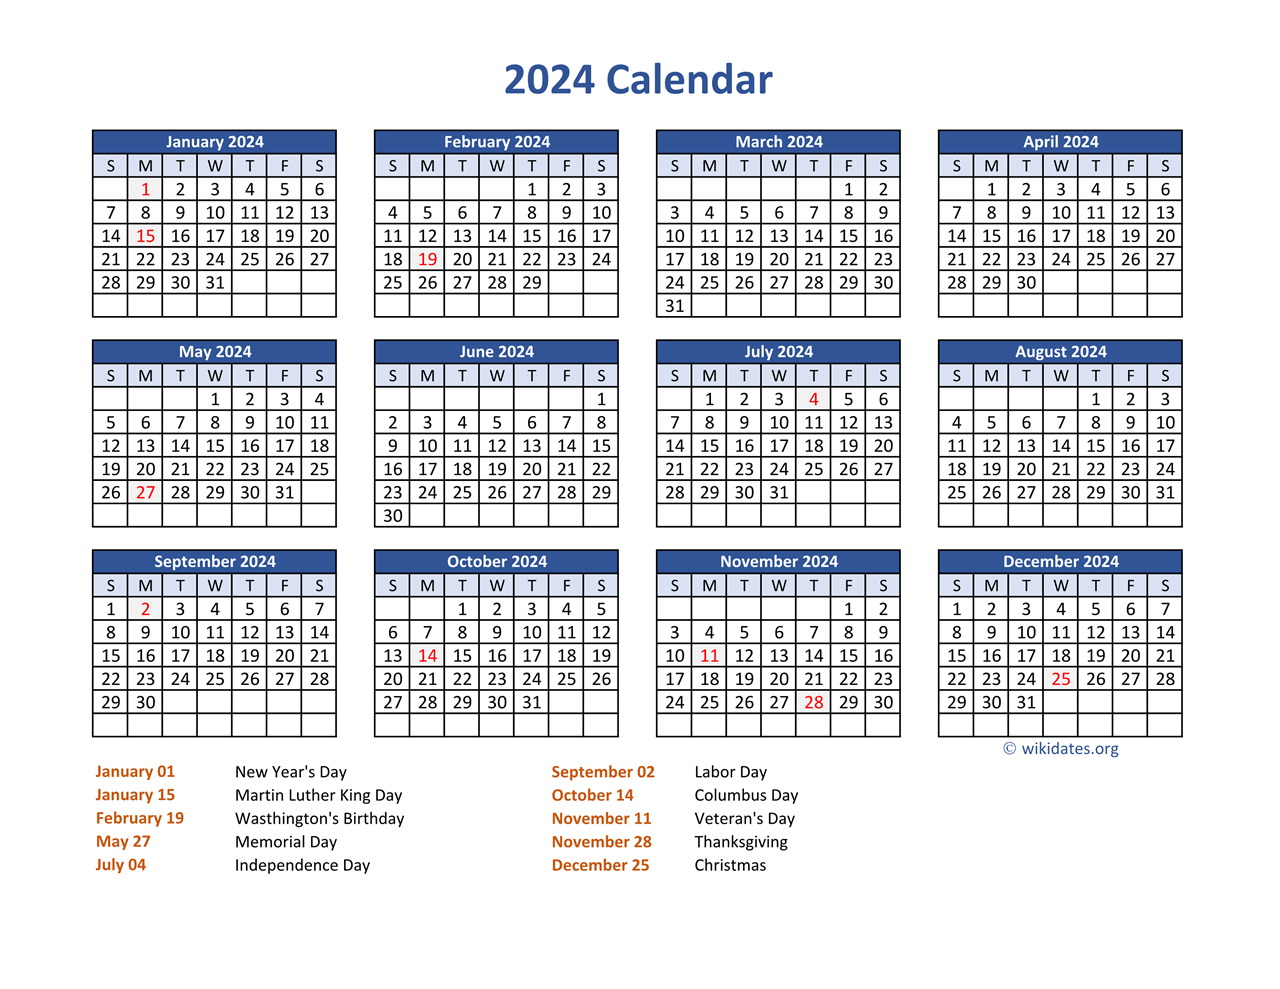 Pdf Calendar 2024 With Federal Holidays | Wikidates for 2024 Calendar With Federal Holidays Printable